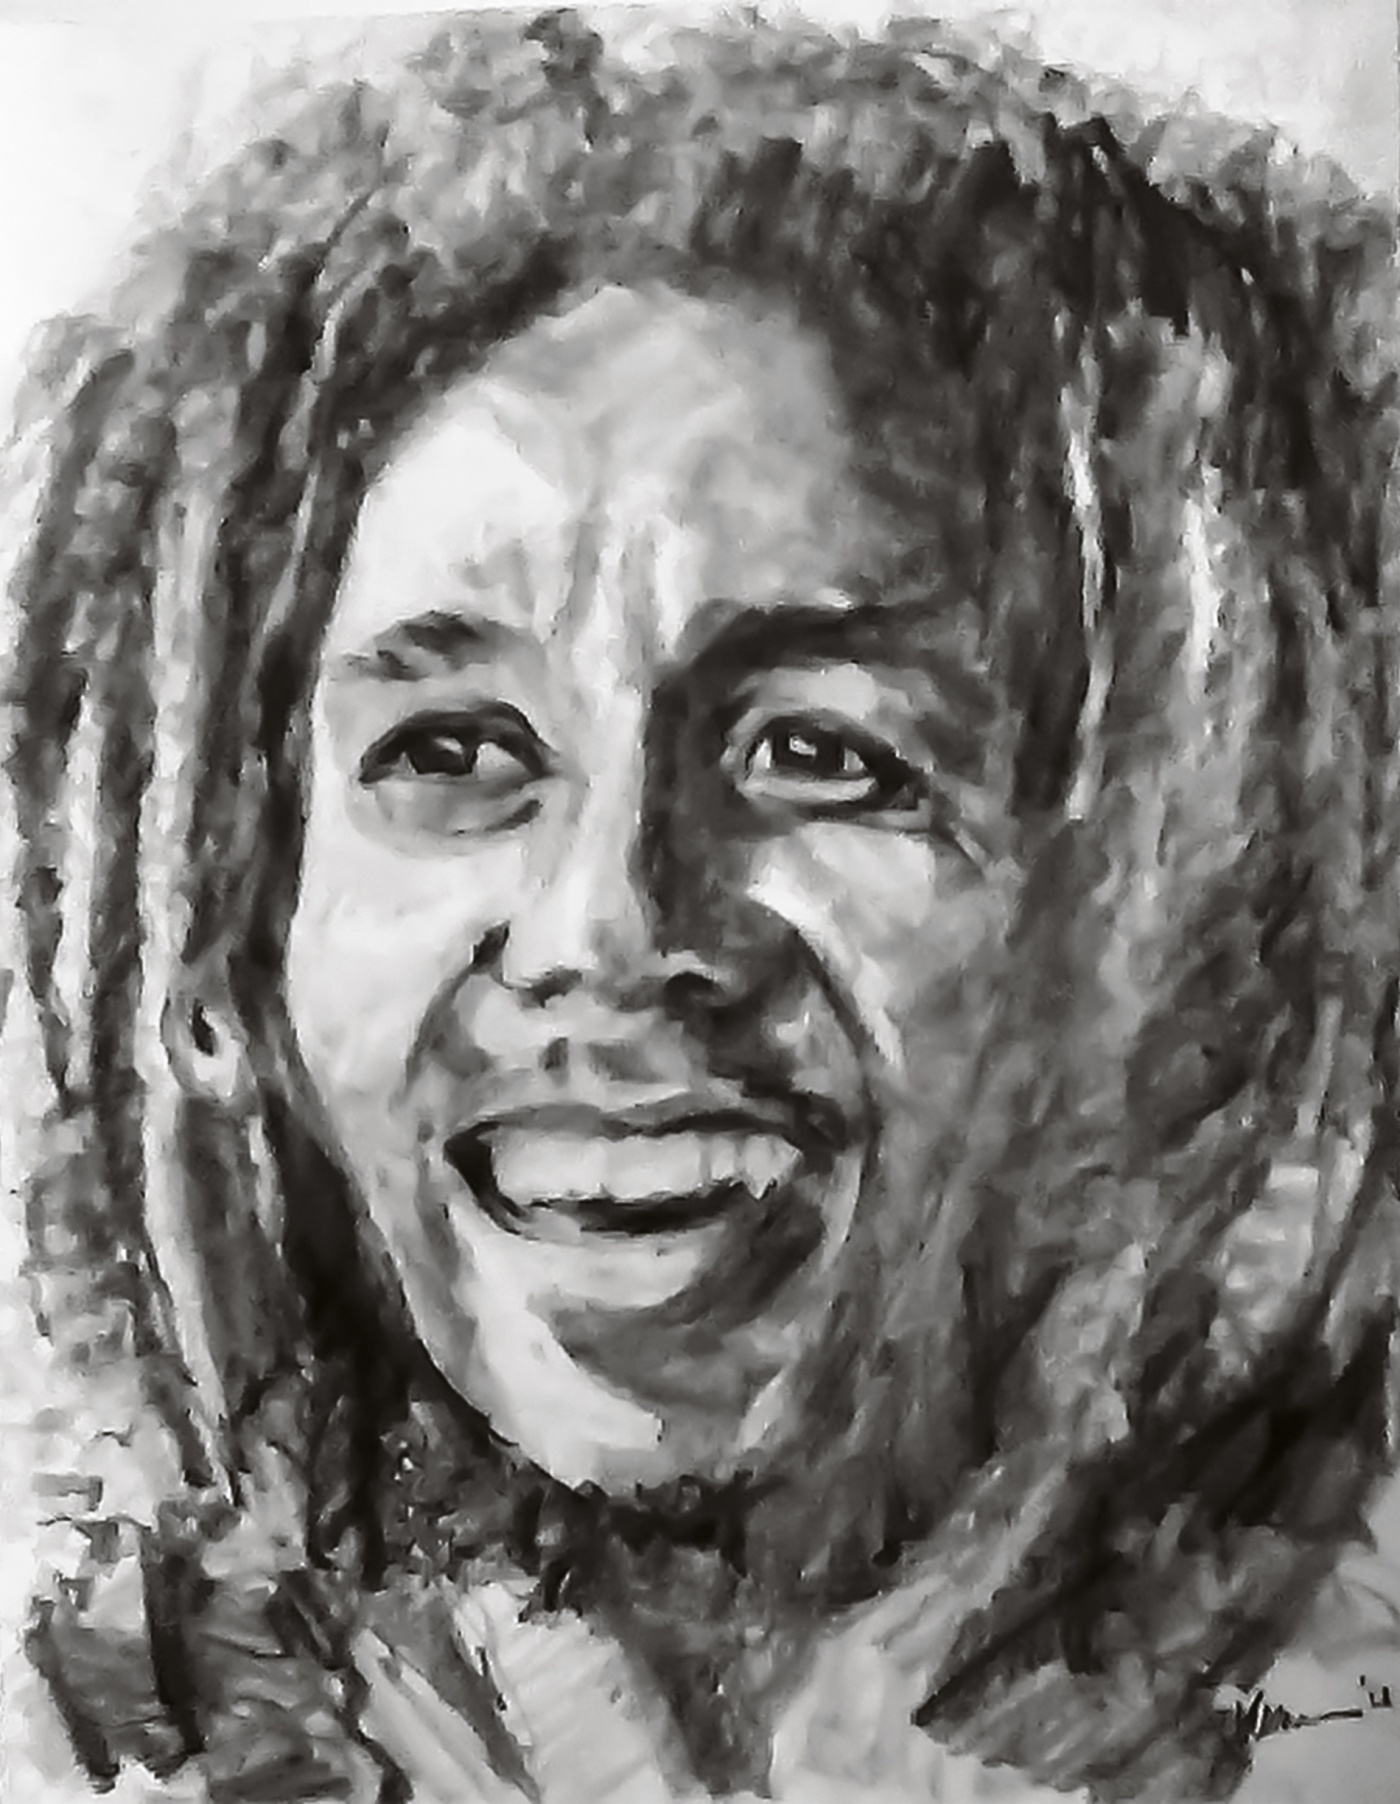 illustrated portrait of Bob Marley